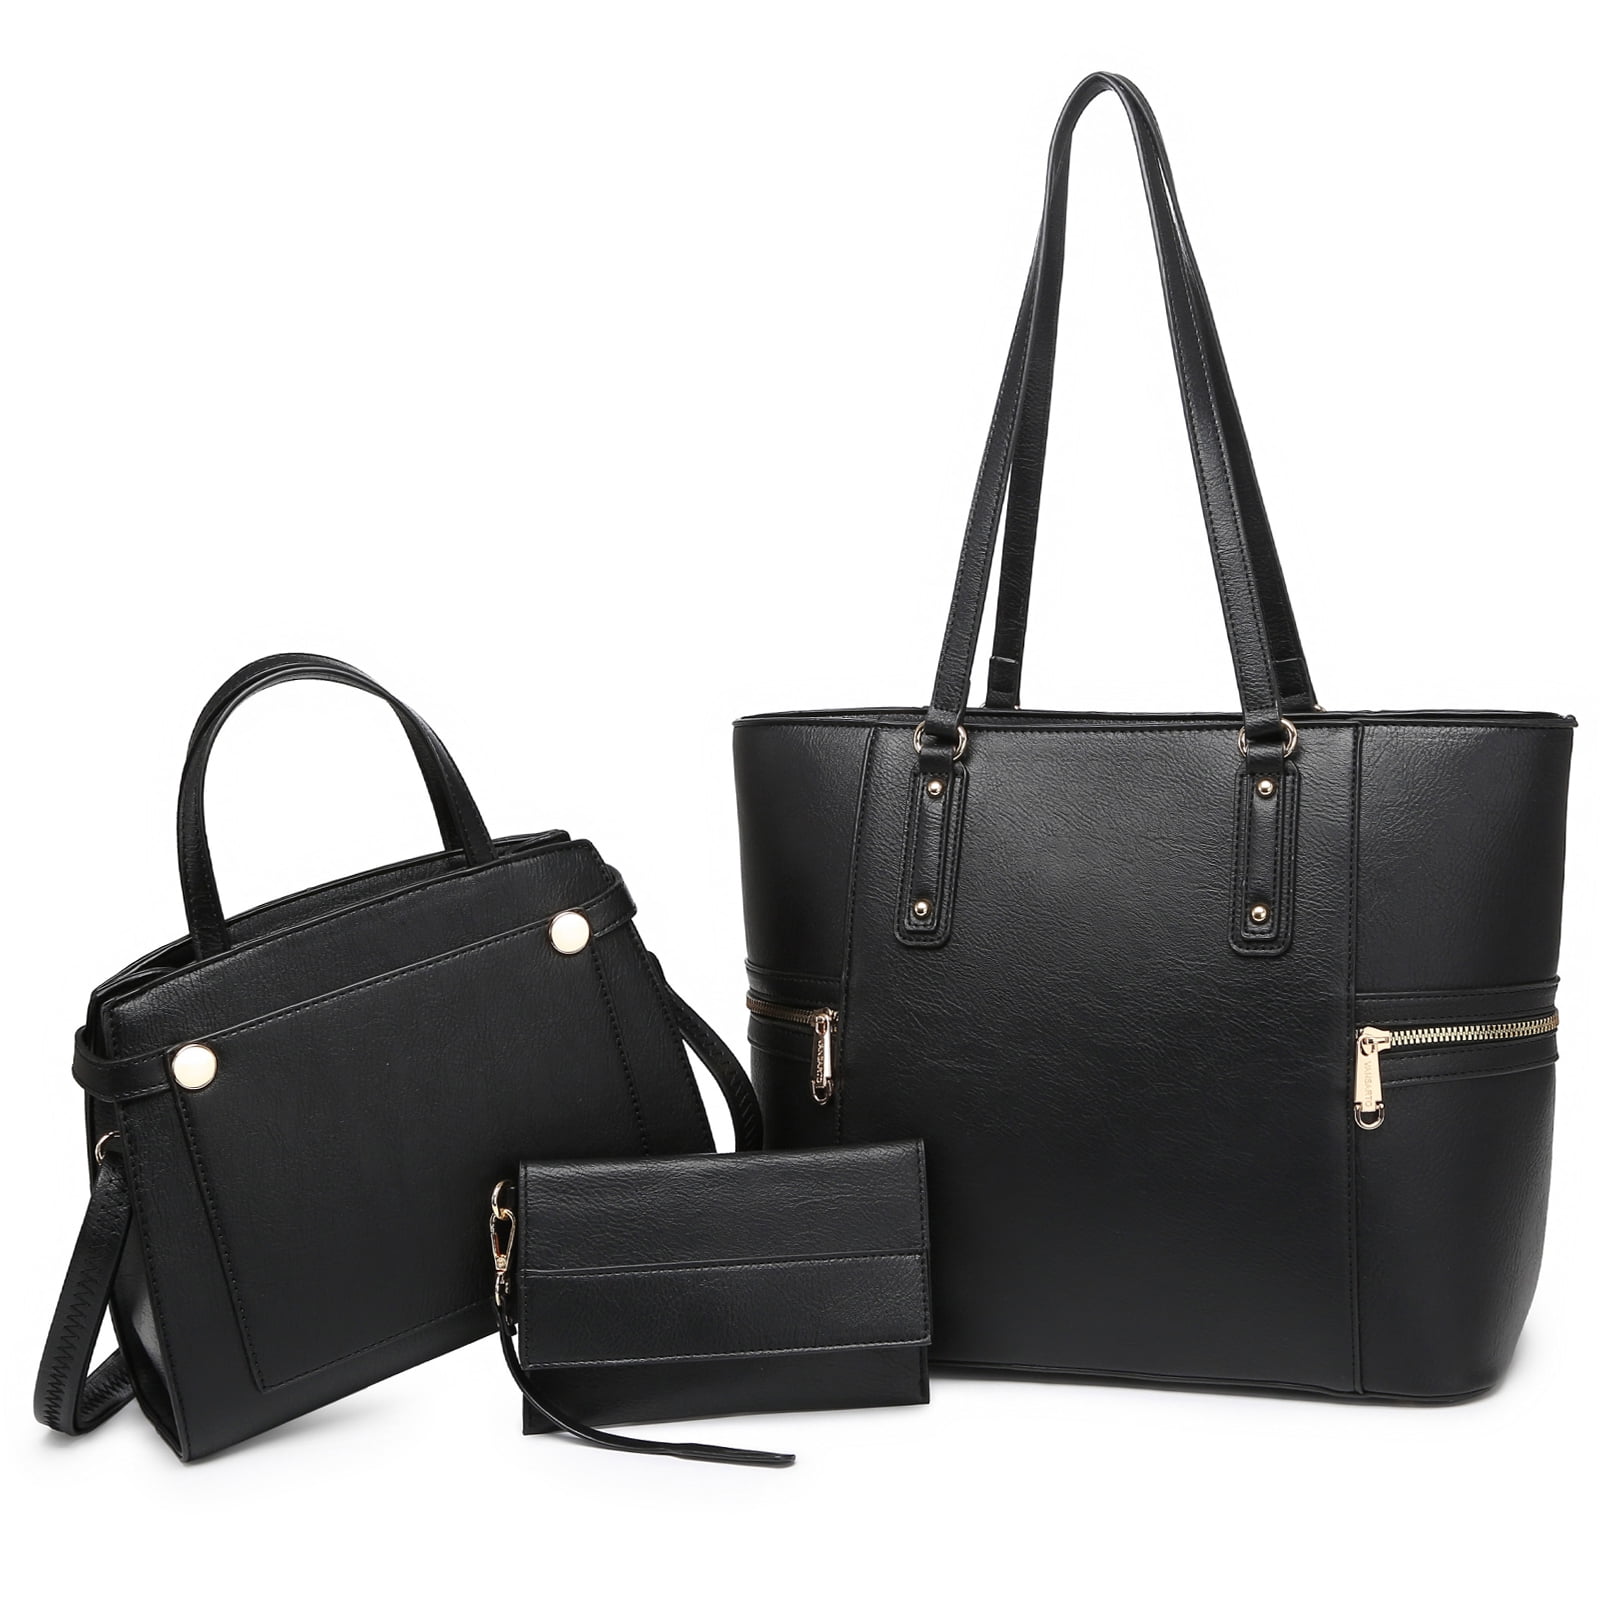 M Marco Women's Handbag 3pcs Set Fashion Tote Bag with Matching Satchel ...